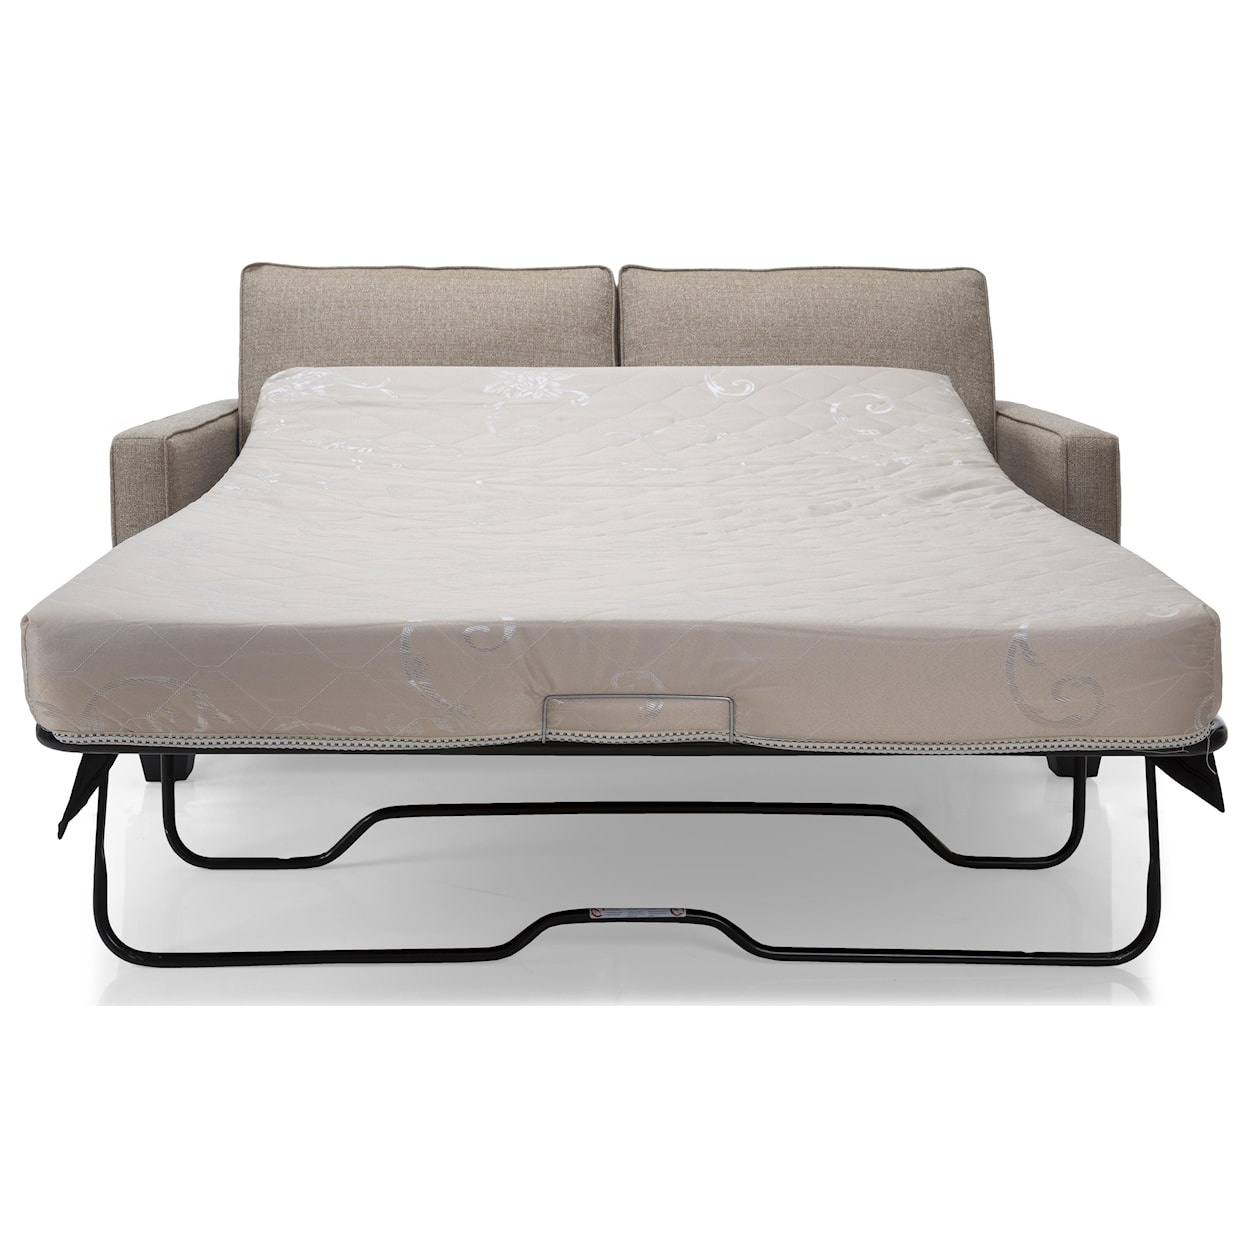 Taelor Designs Lara Double Sleeper Sofa Bed